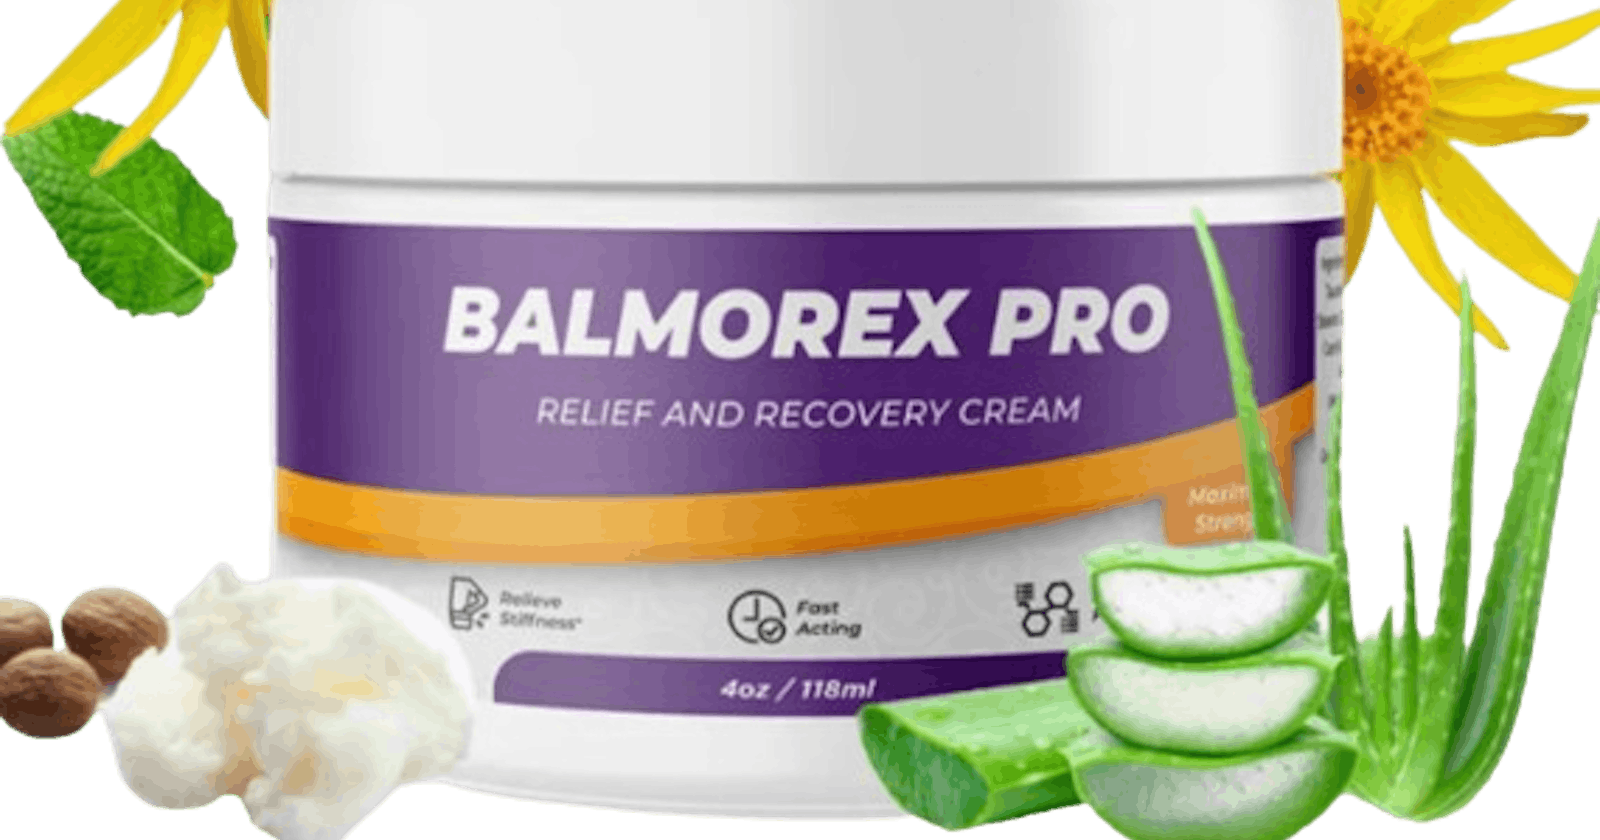 Balmorex Pro Reviews - Detailed Analysis On Ingredients, Benefits, Side Effects & Price!